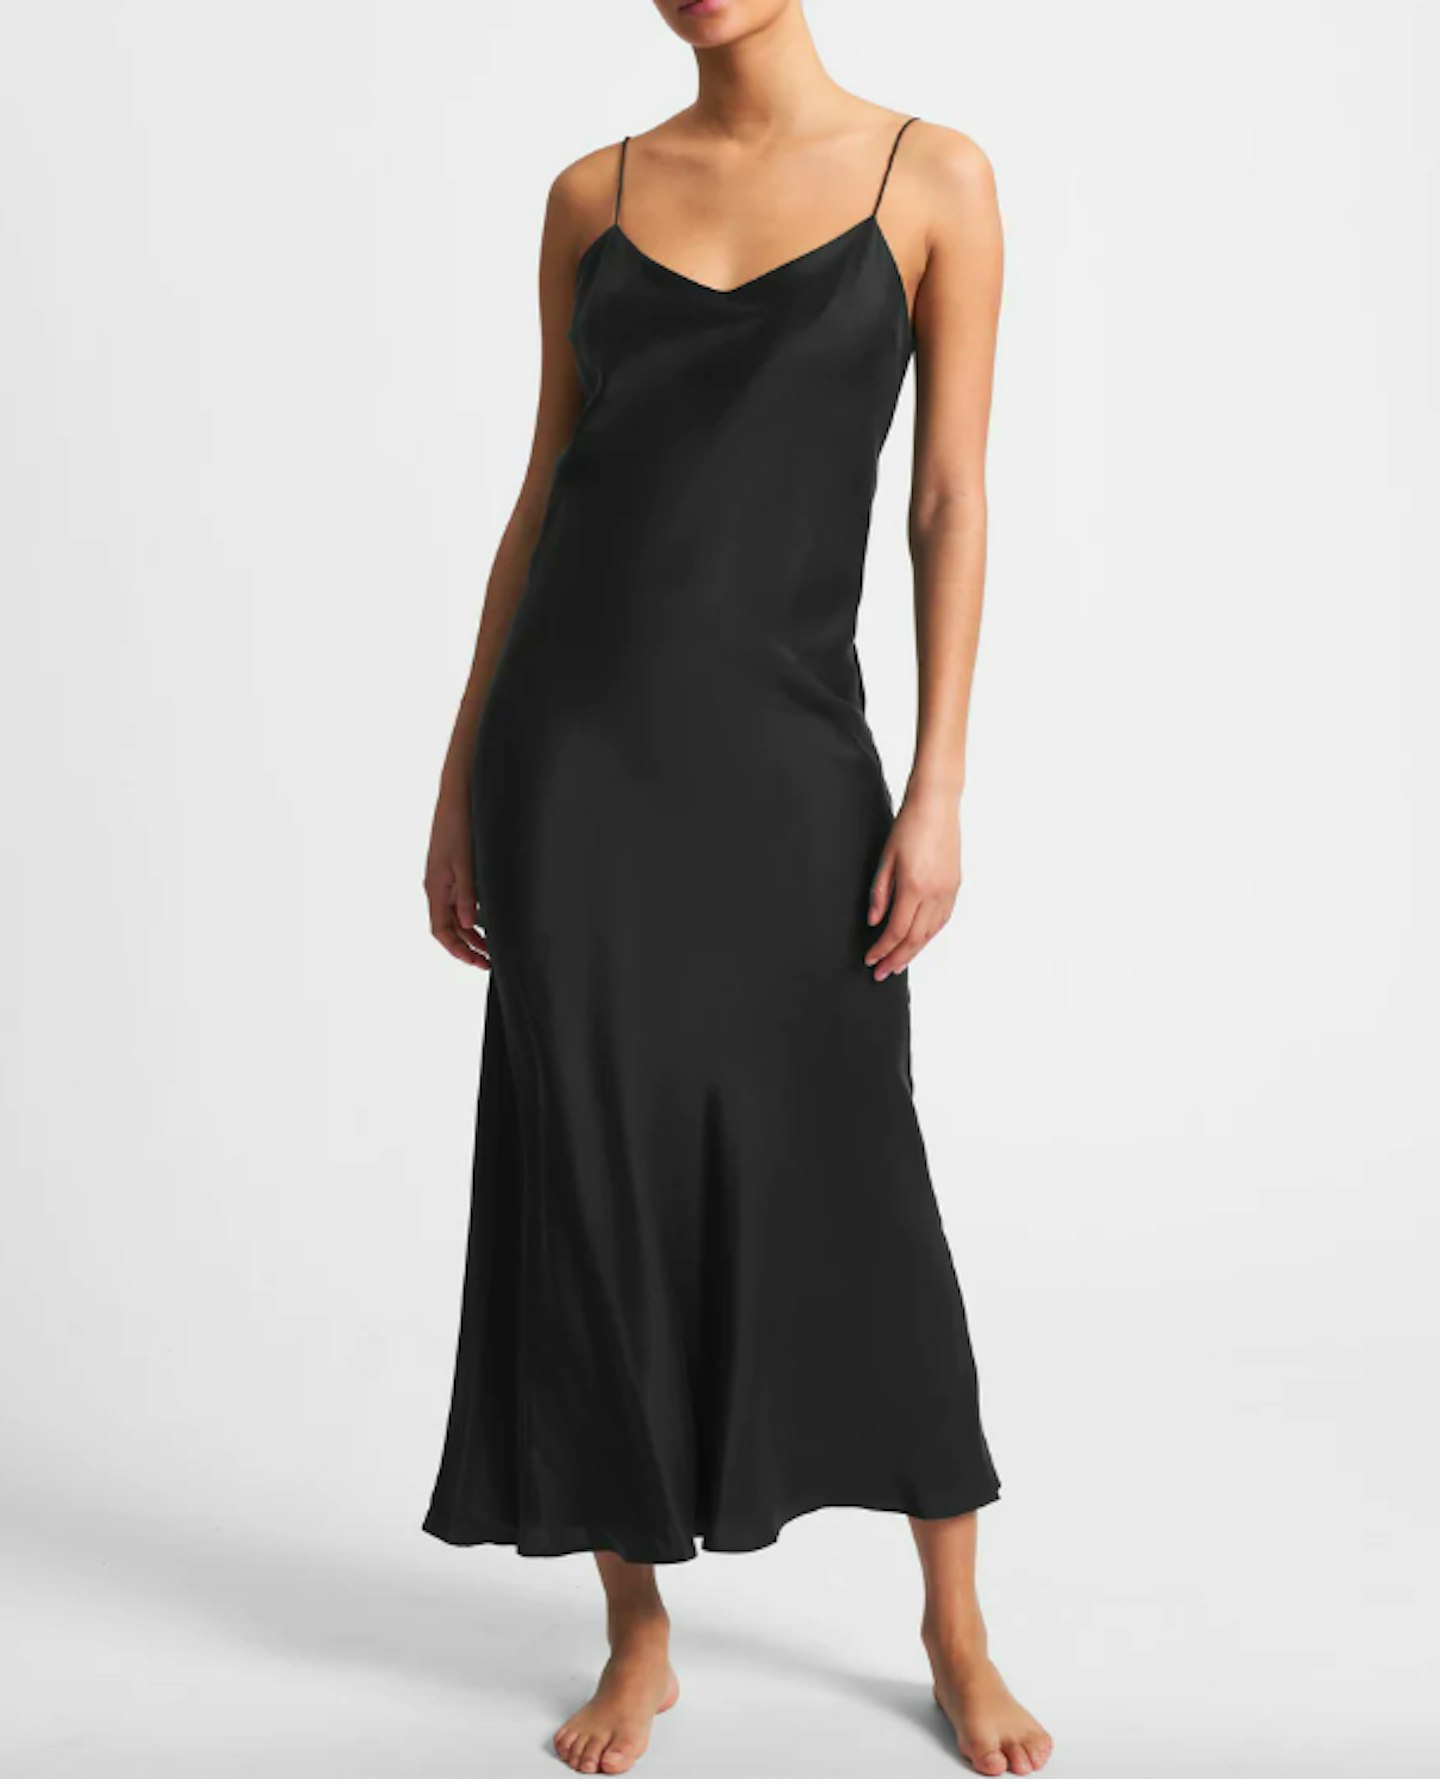 Acsceno, Lyon Black Silk Slip Dress, £295